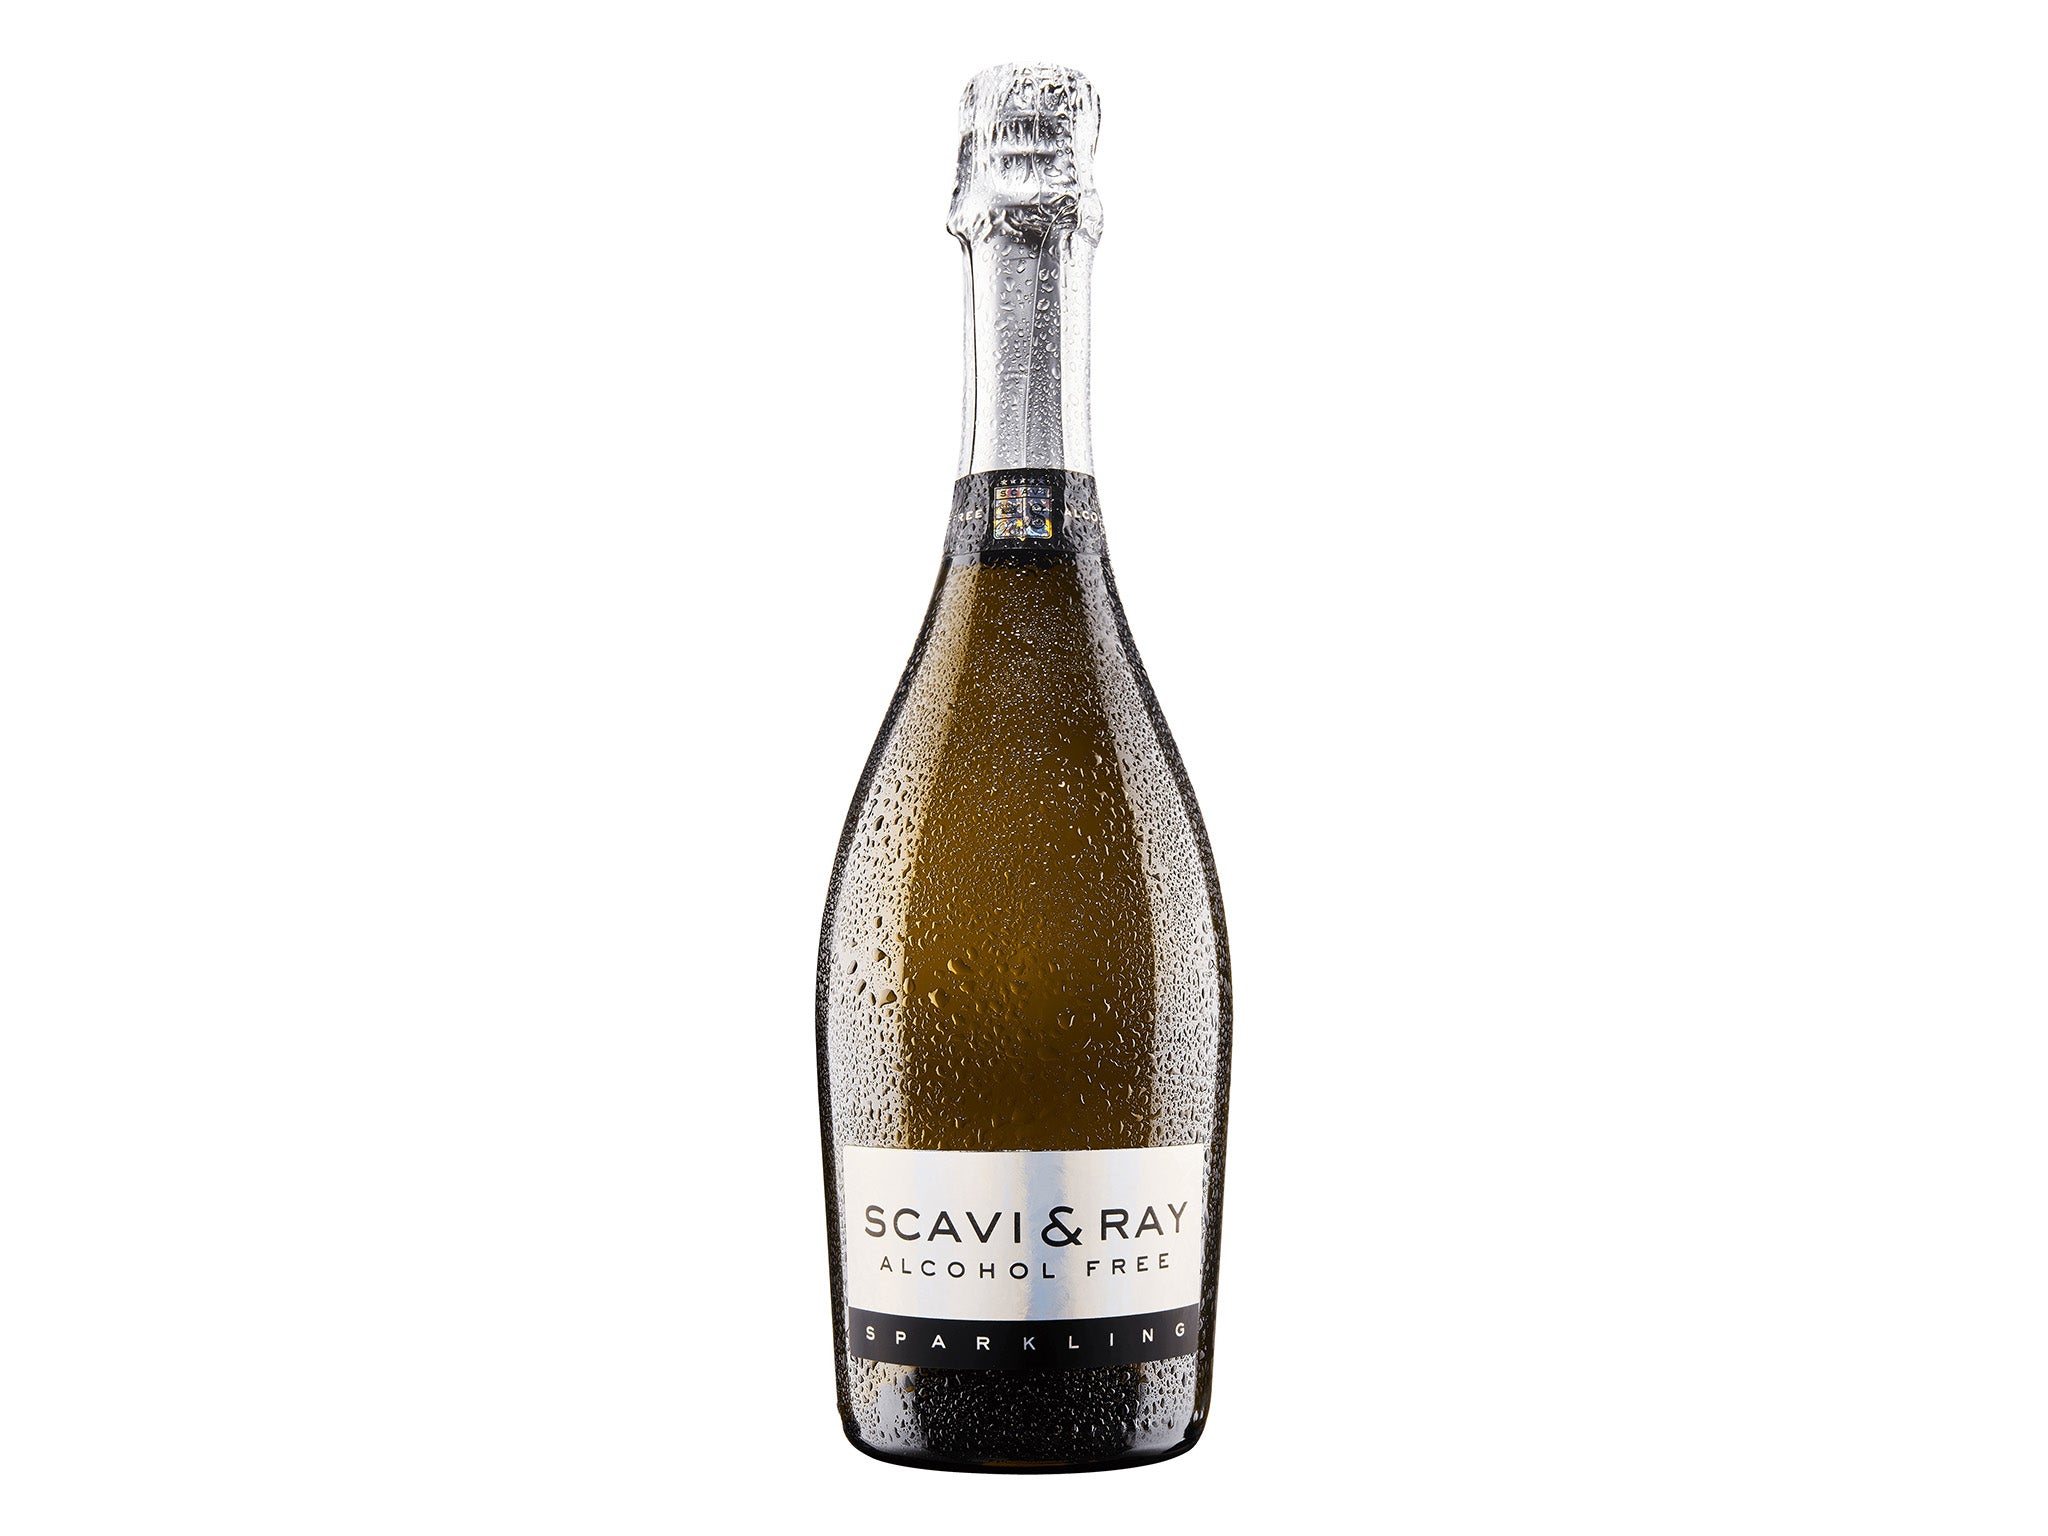 Scavi & Ray alcohol free sparkling wine